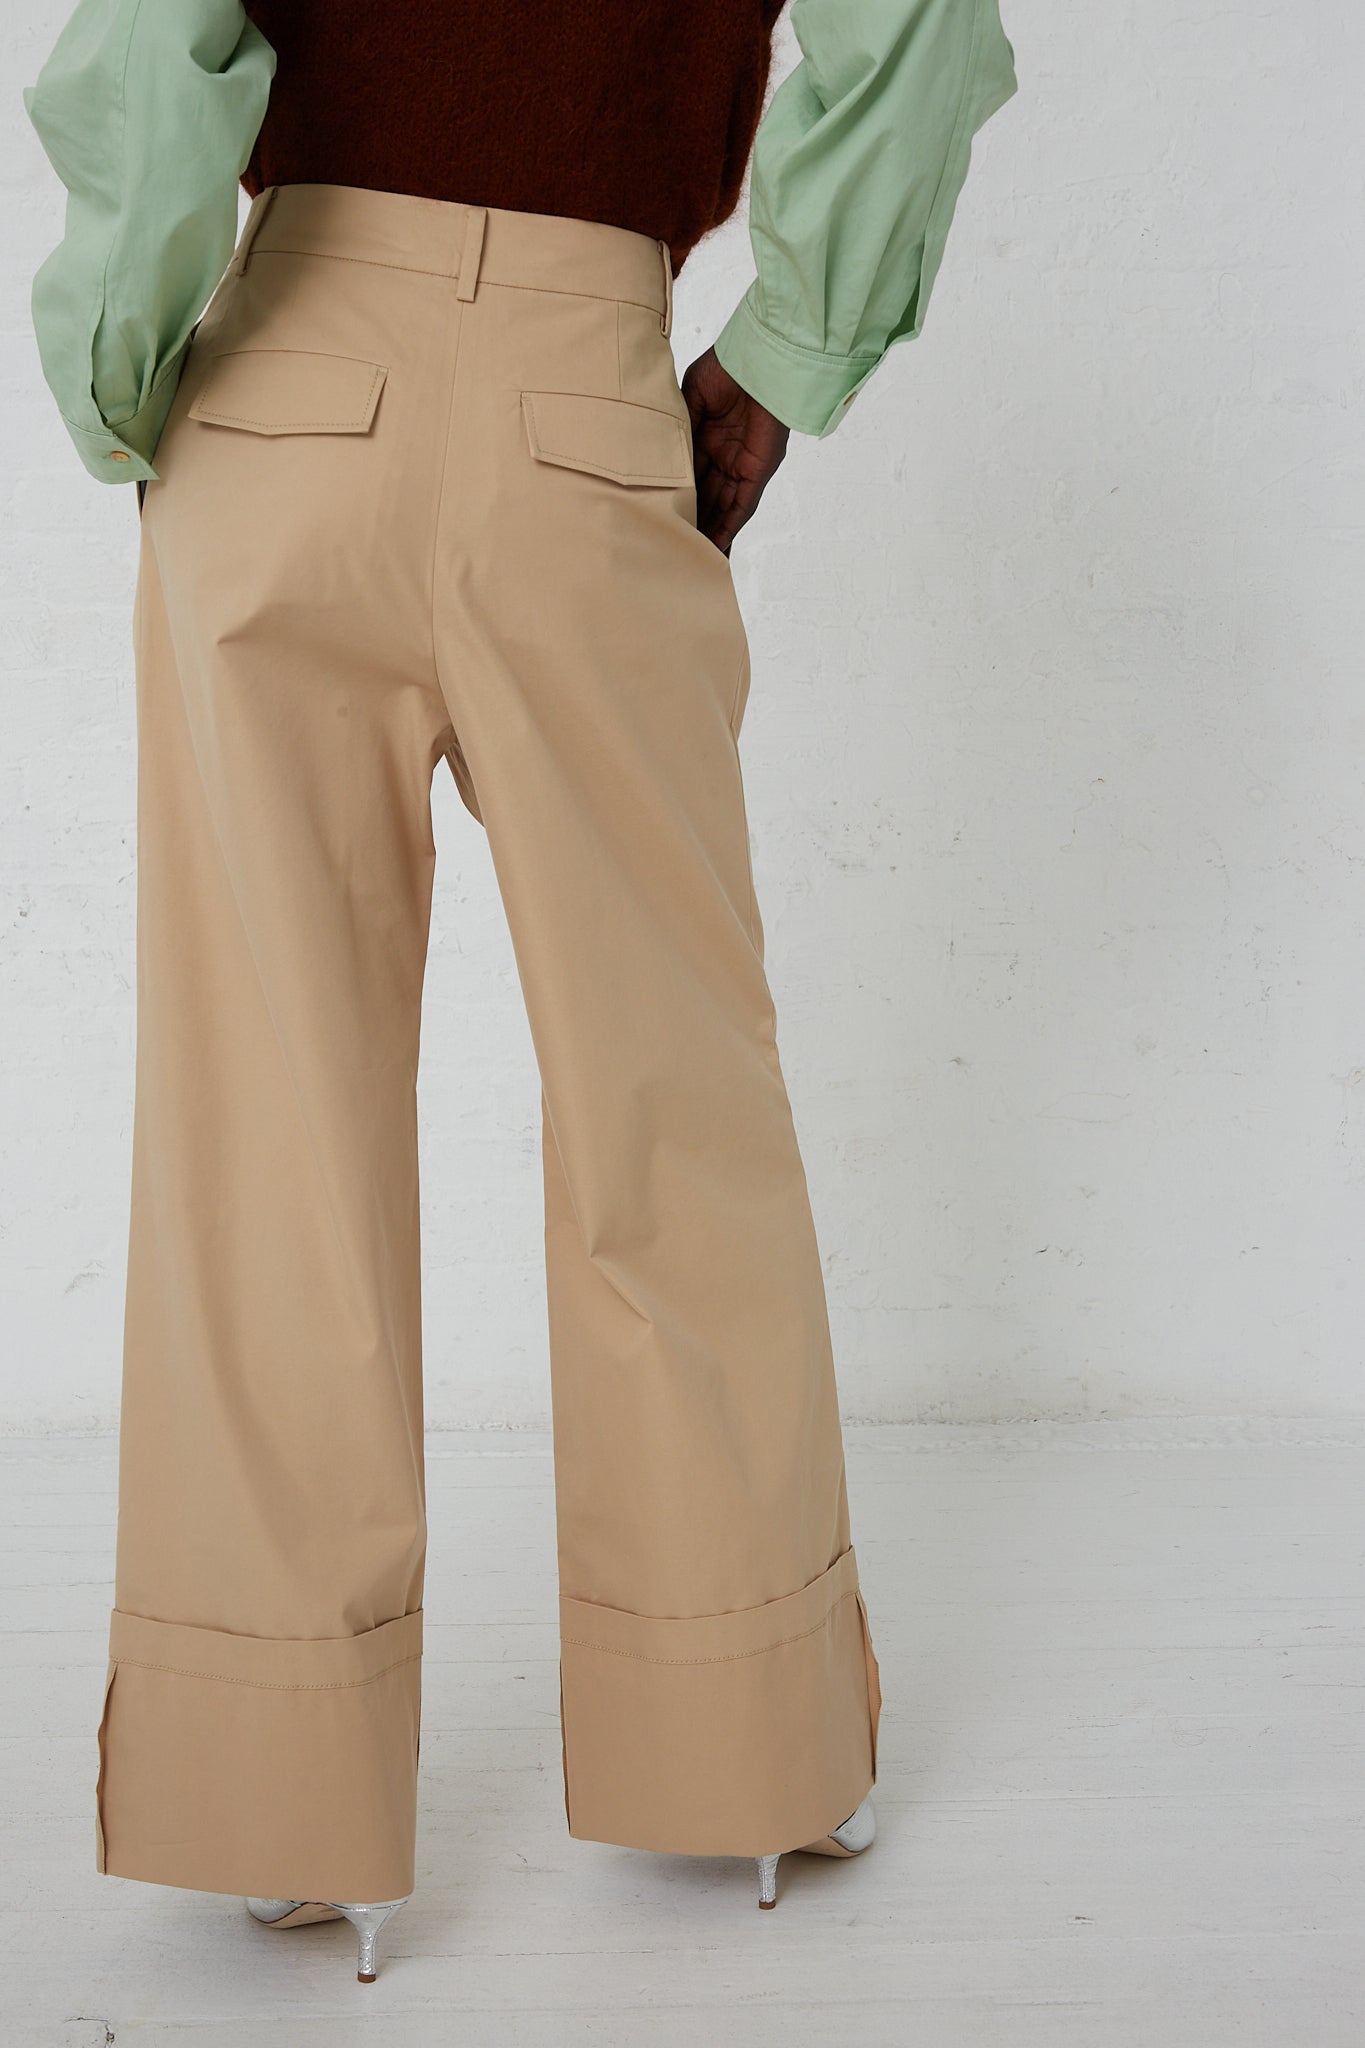 The back view of a woman wearing Rejina Pyo's Cotton Blend Macie Trouser in Tan, beige wide leg double pleat pants.